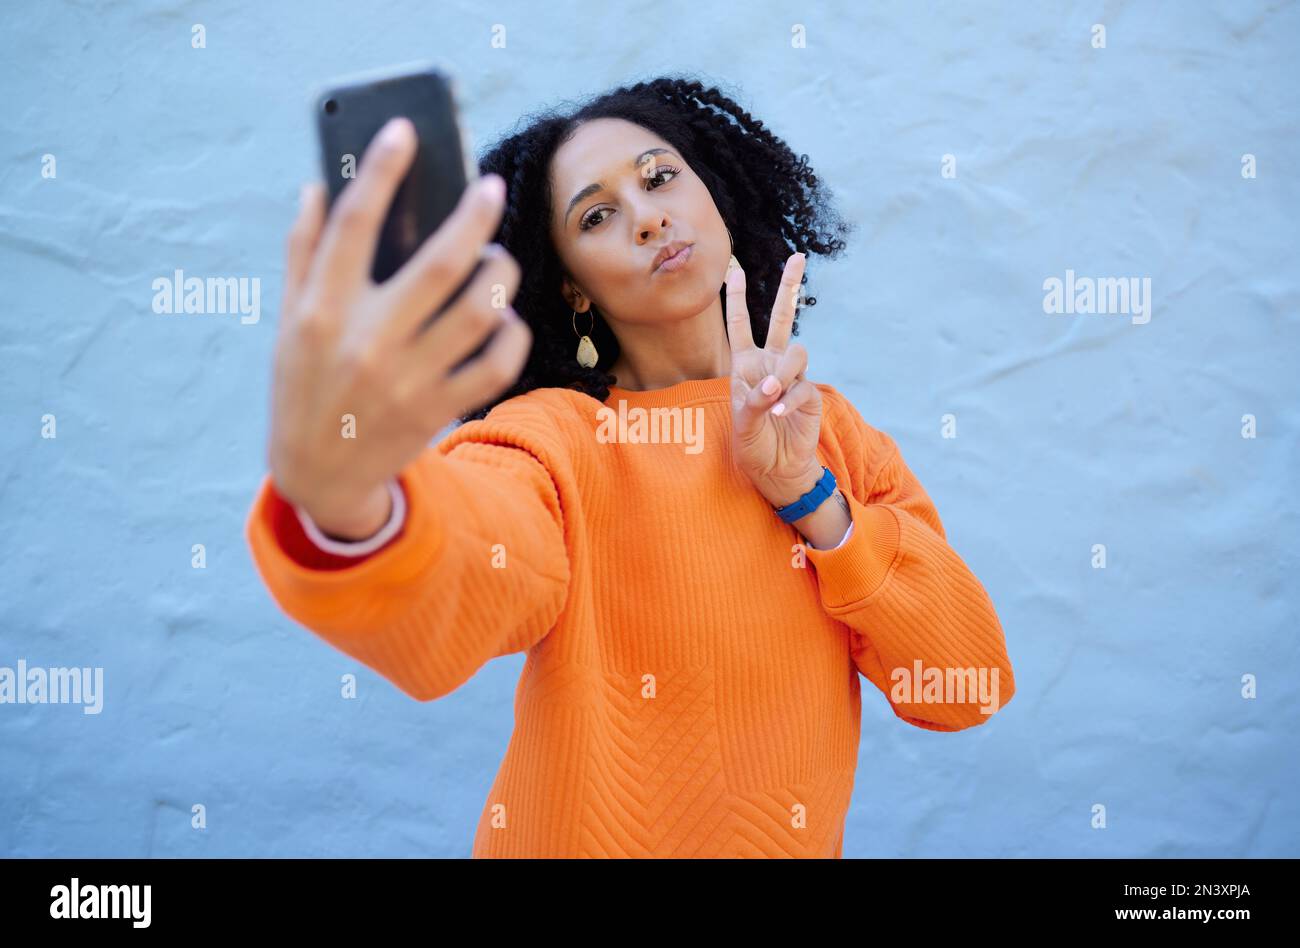 21 Best Selfie Poses: The Perfect Selfie (2021) | Shuttertalk